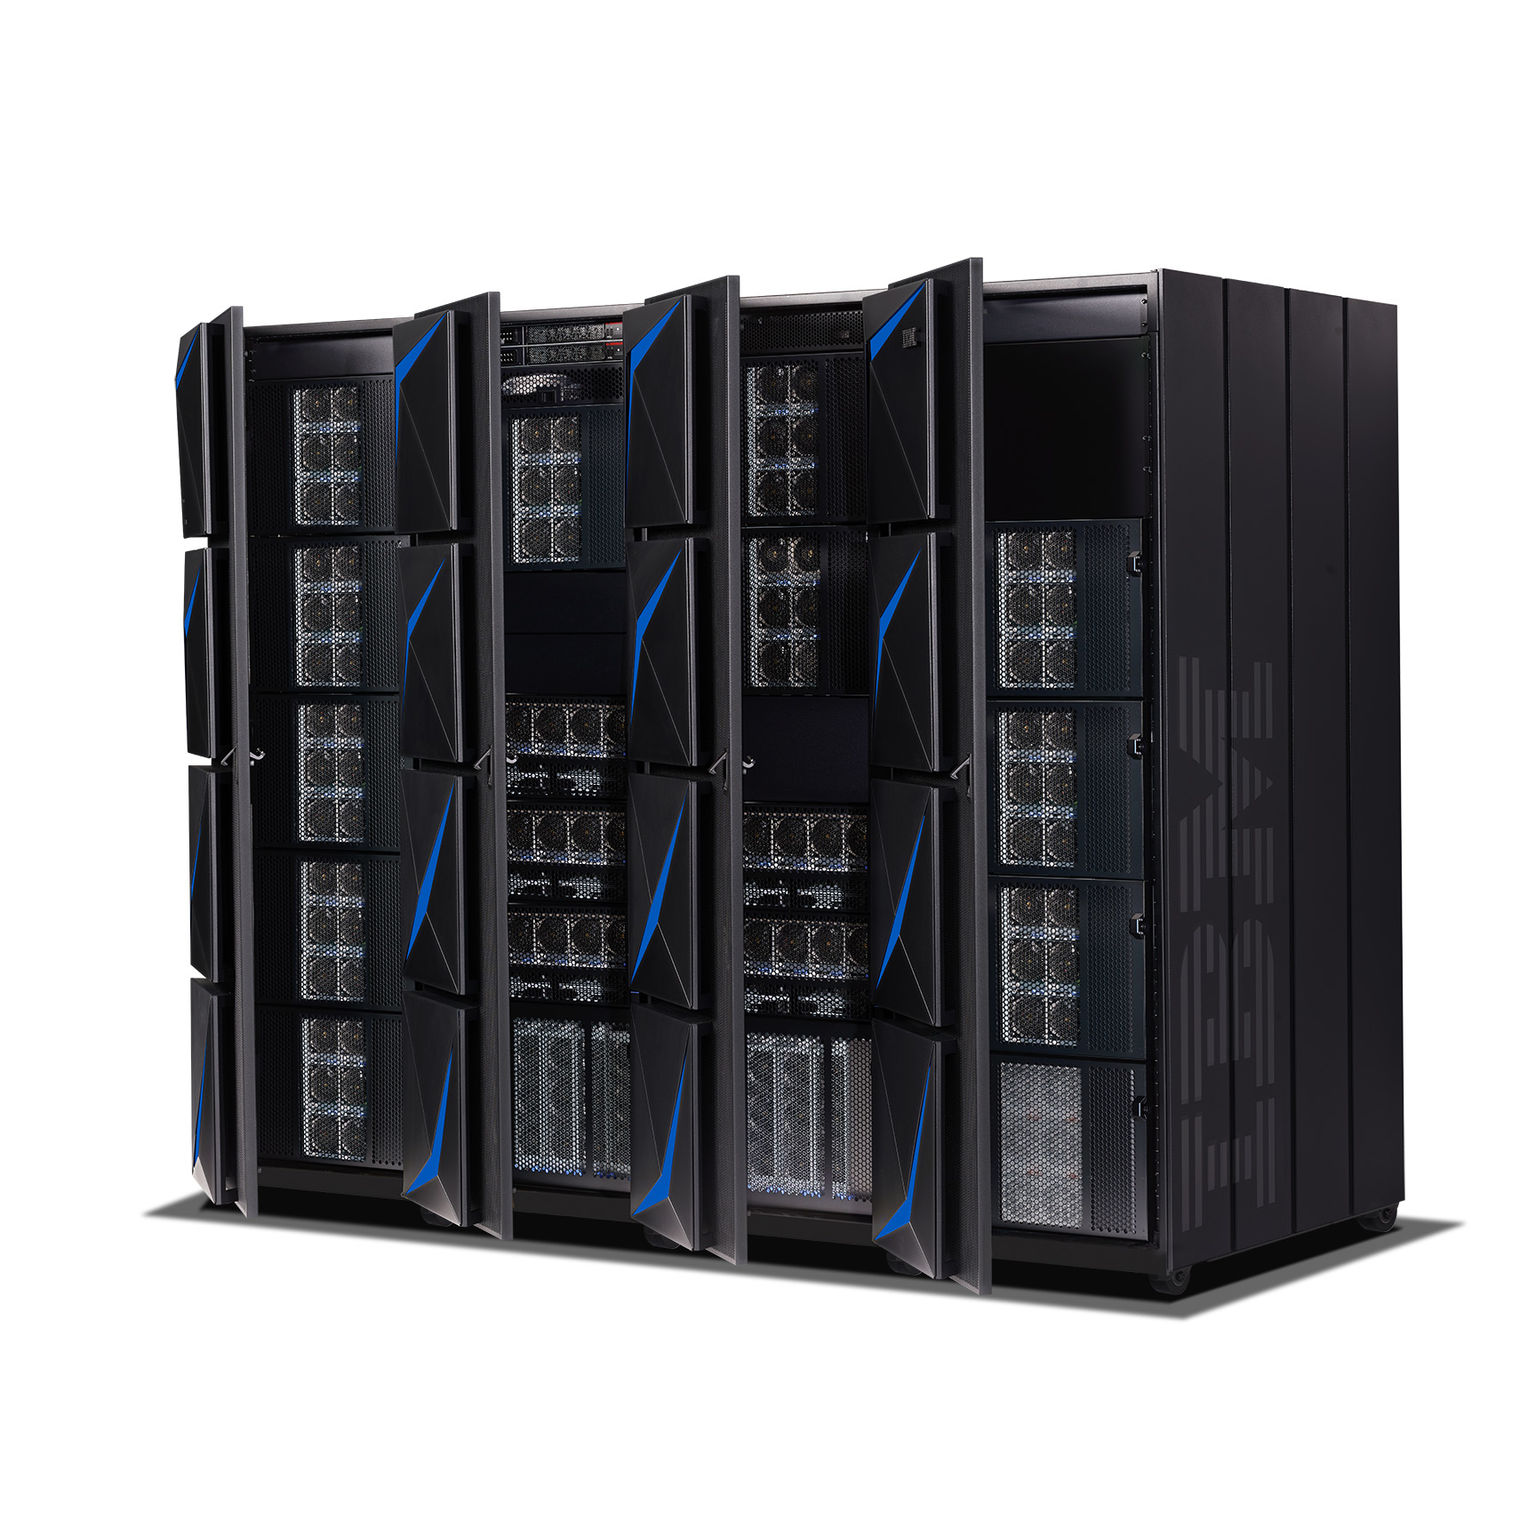 IBM z15 Mainframe